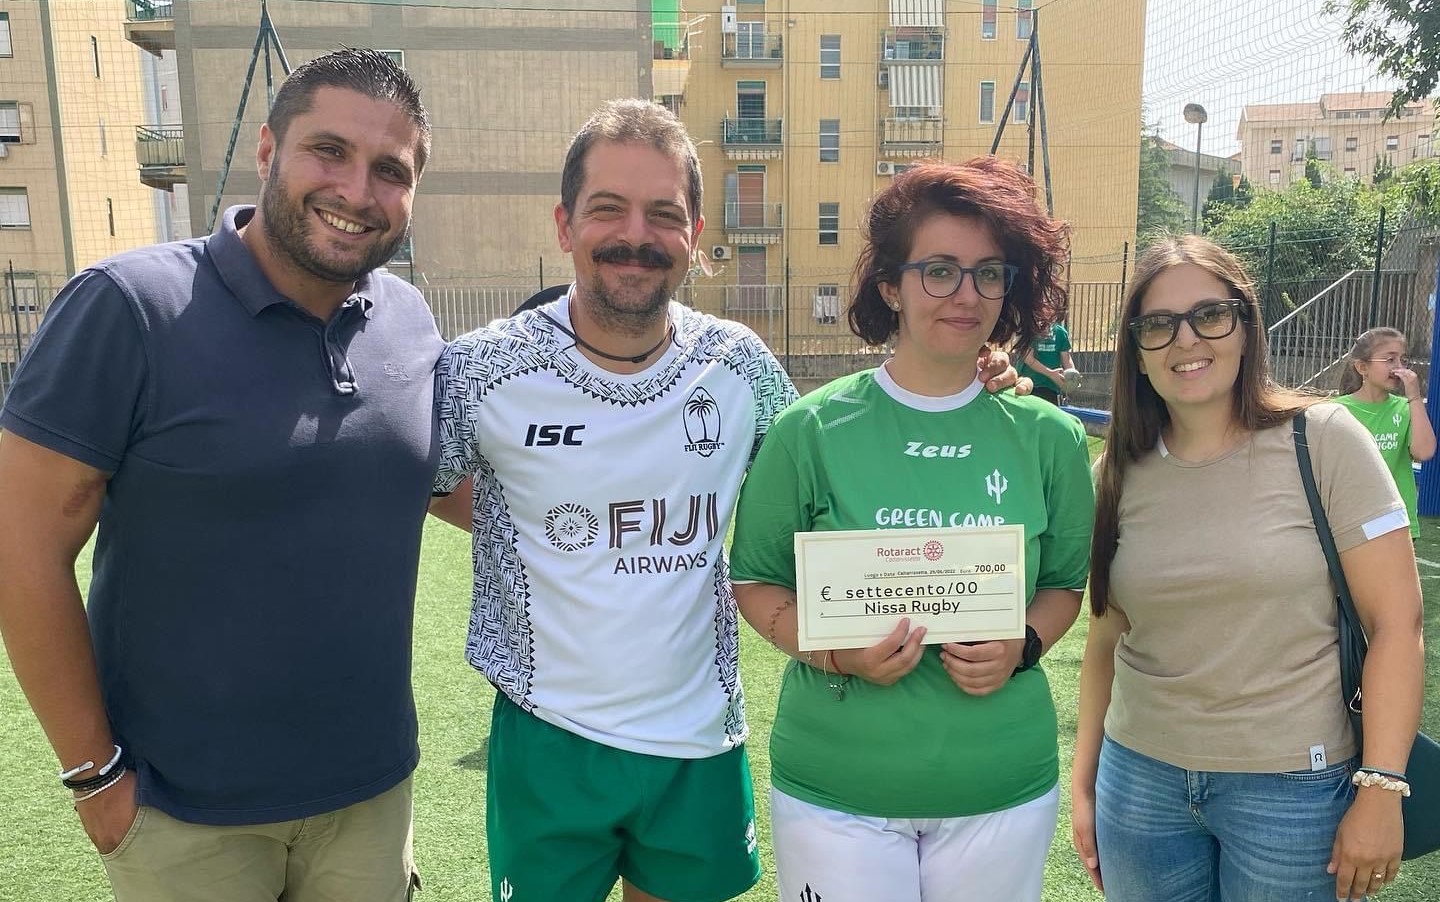 Caltanissetta, Green Camp DLF Nissa Rugby: donazione del Rotaract Club per i ragazzi ucraini